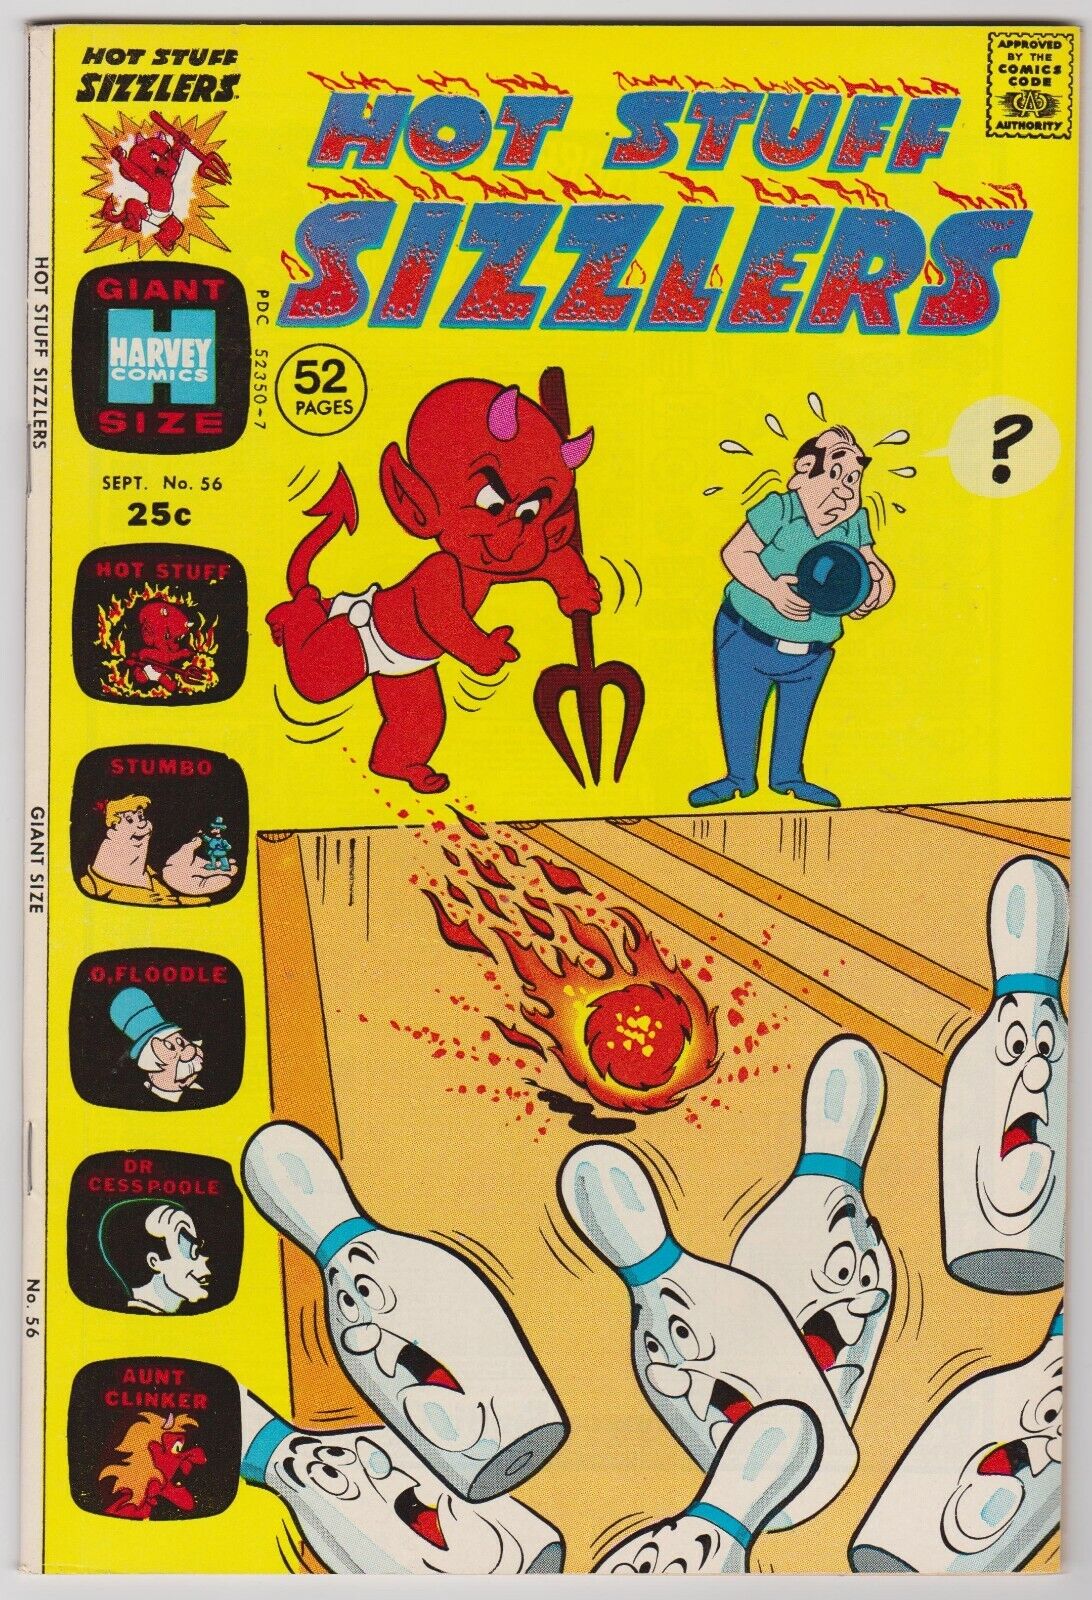 Hot Stuff Sizzlers #56  Harvey Giant  File Copy Comic  1973  NM-